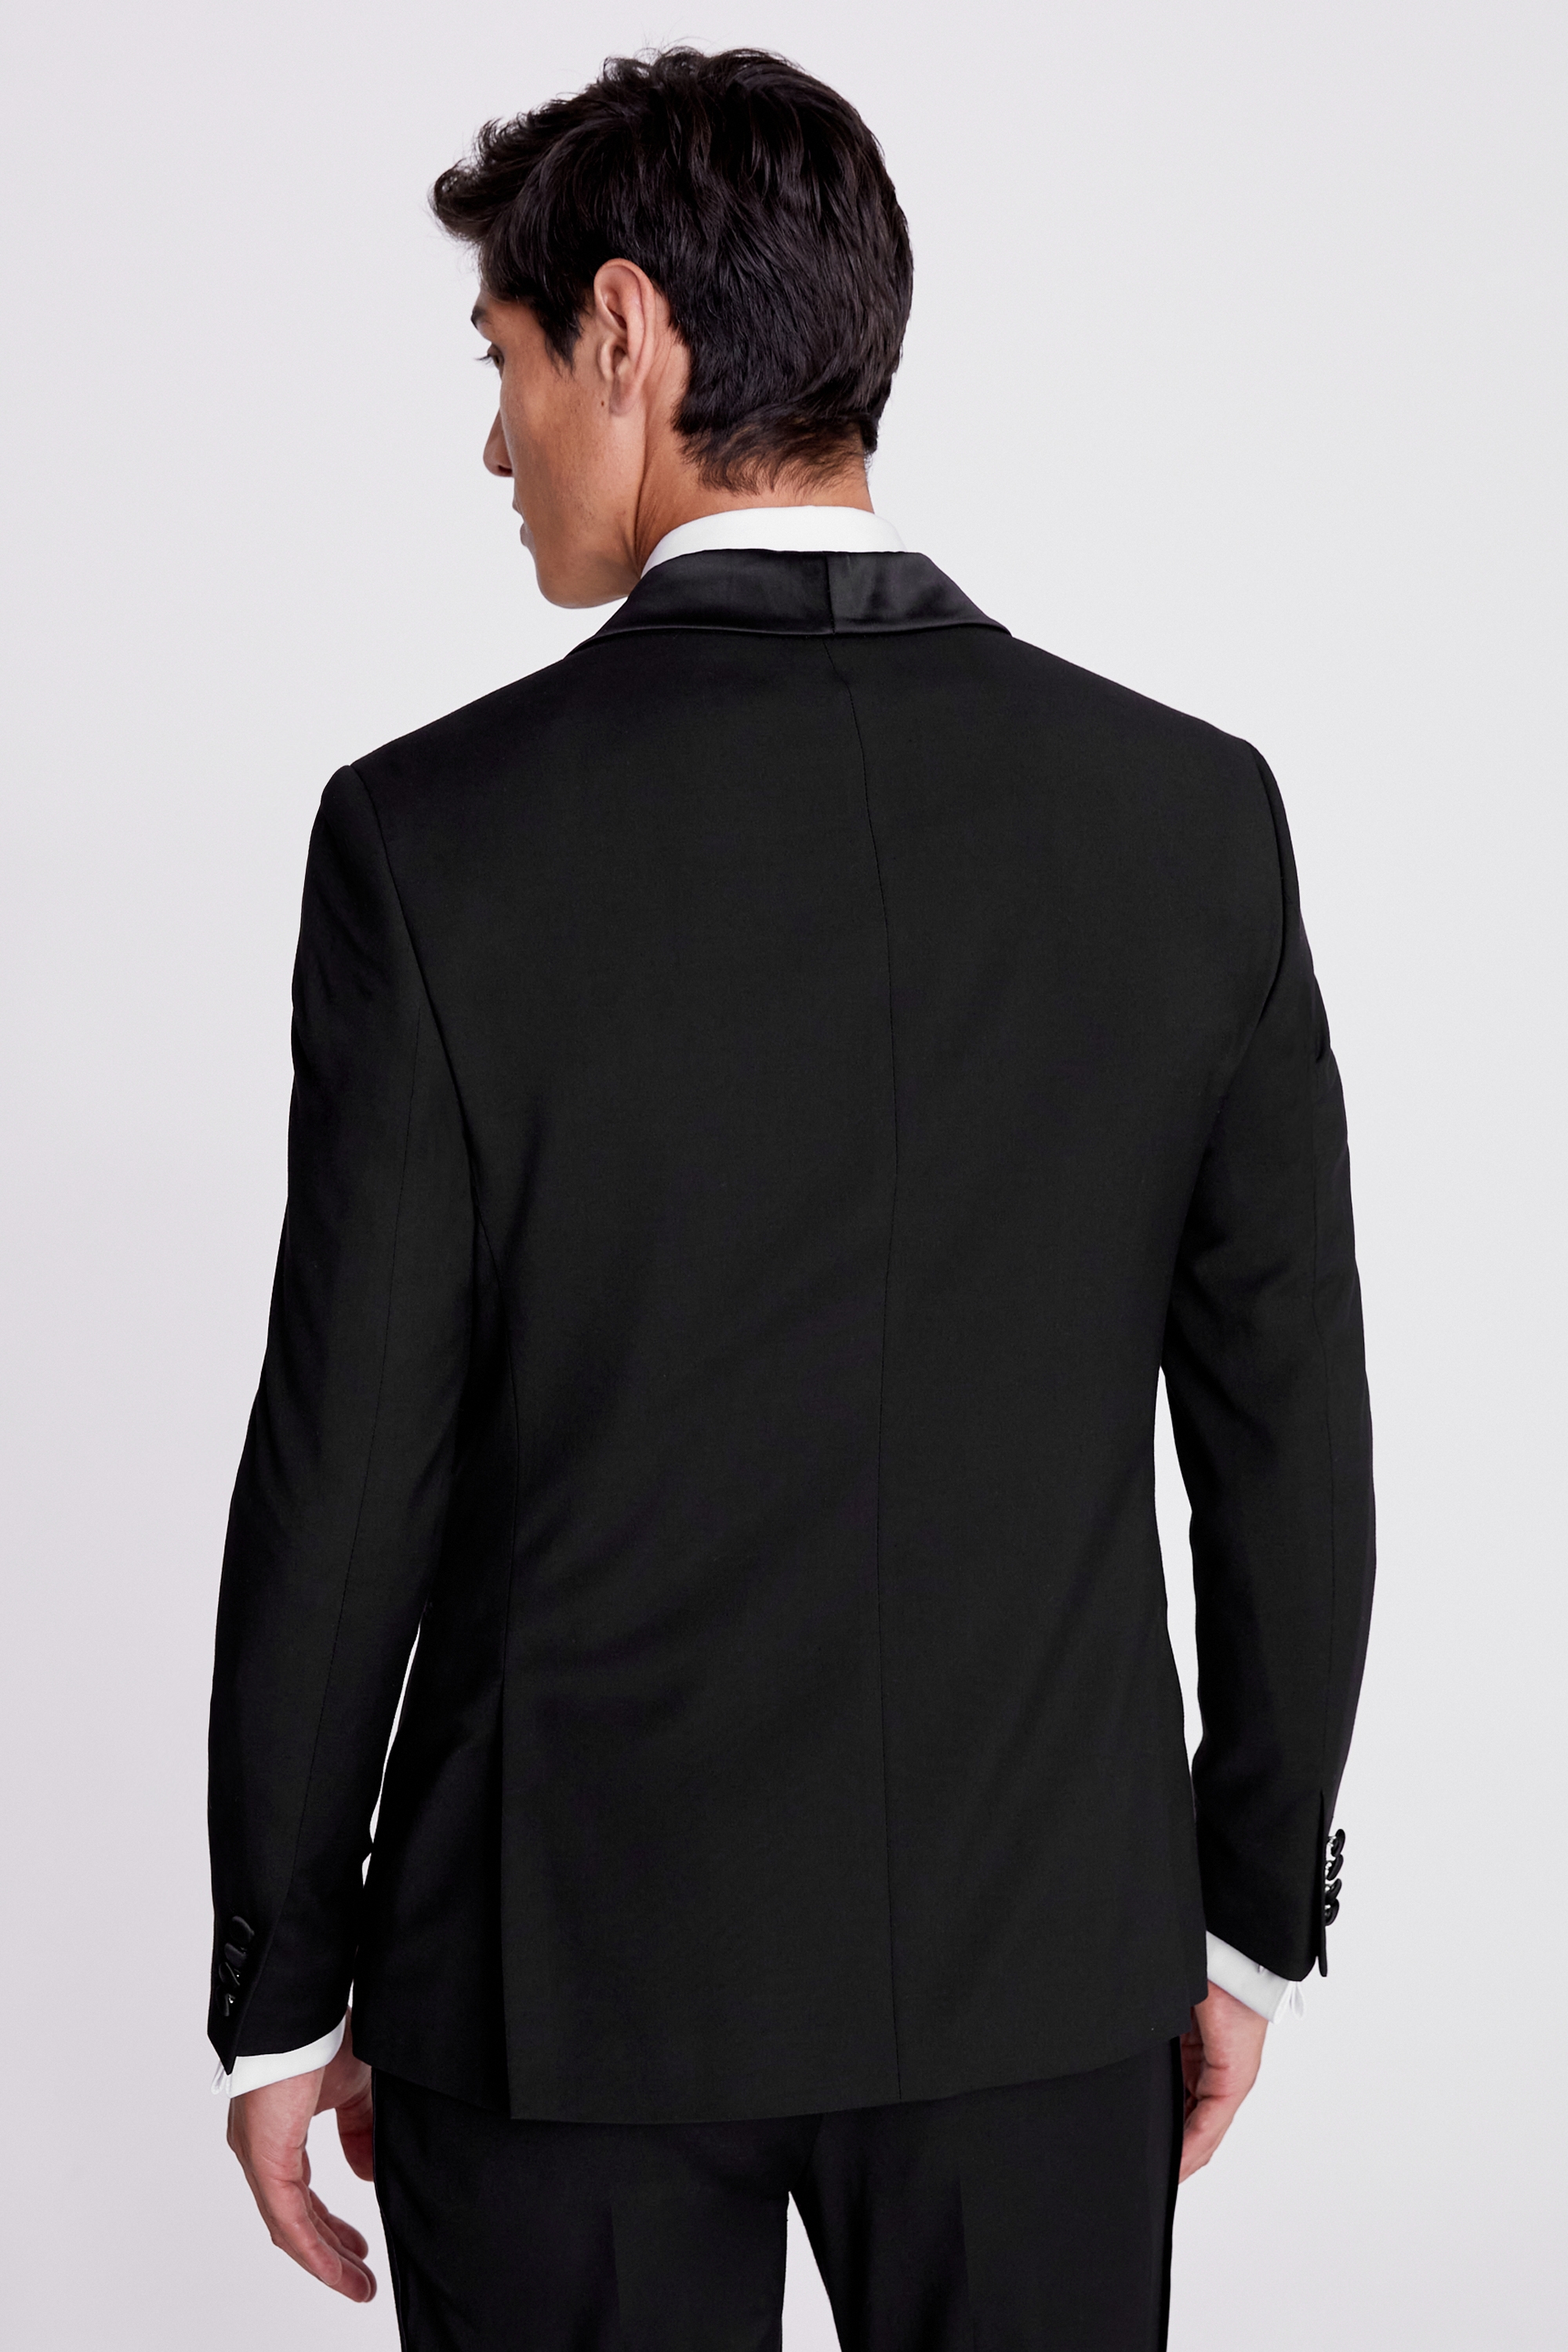 Slim Fit Black Shawl Lapel Tuxedo Jacket | Buy Online at Moss